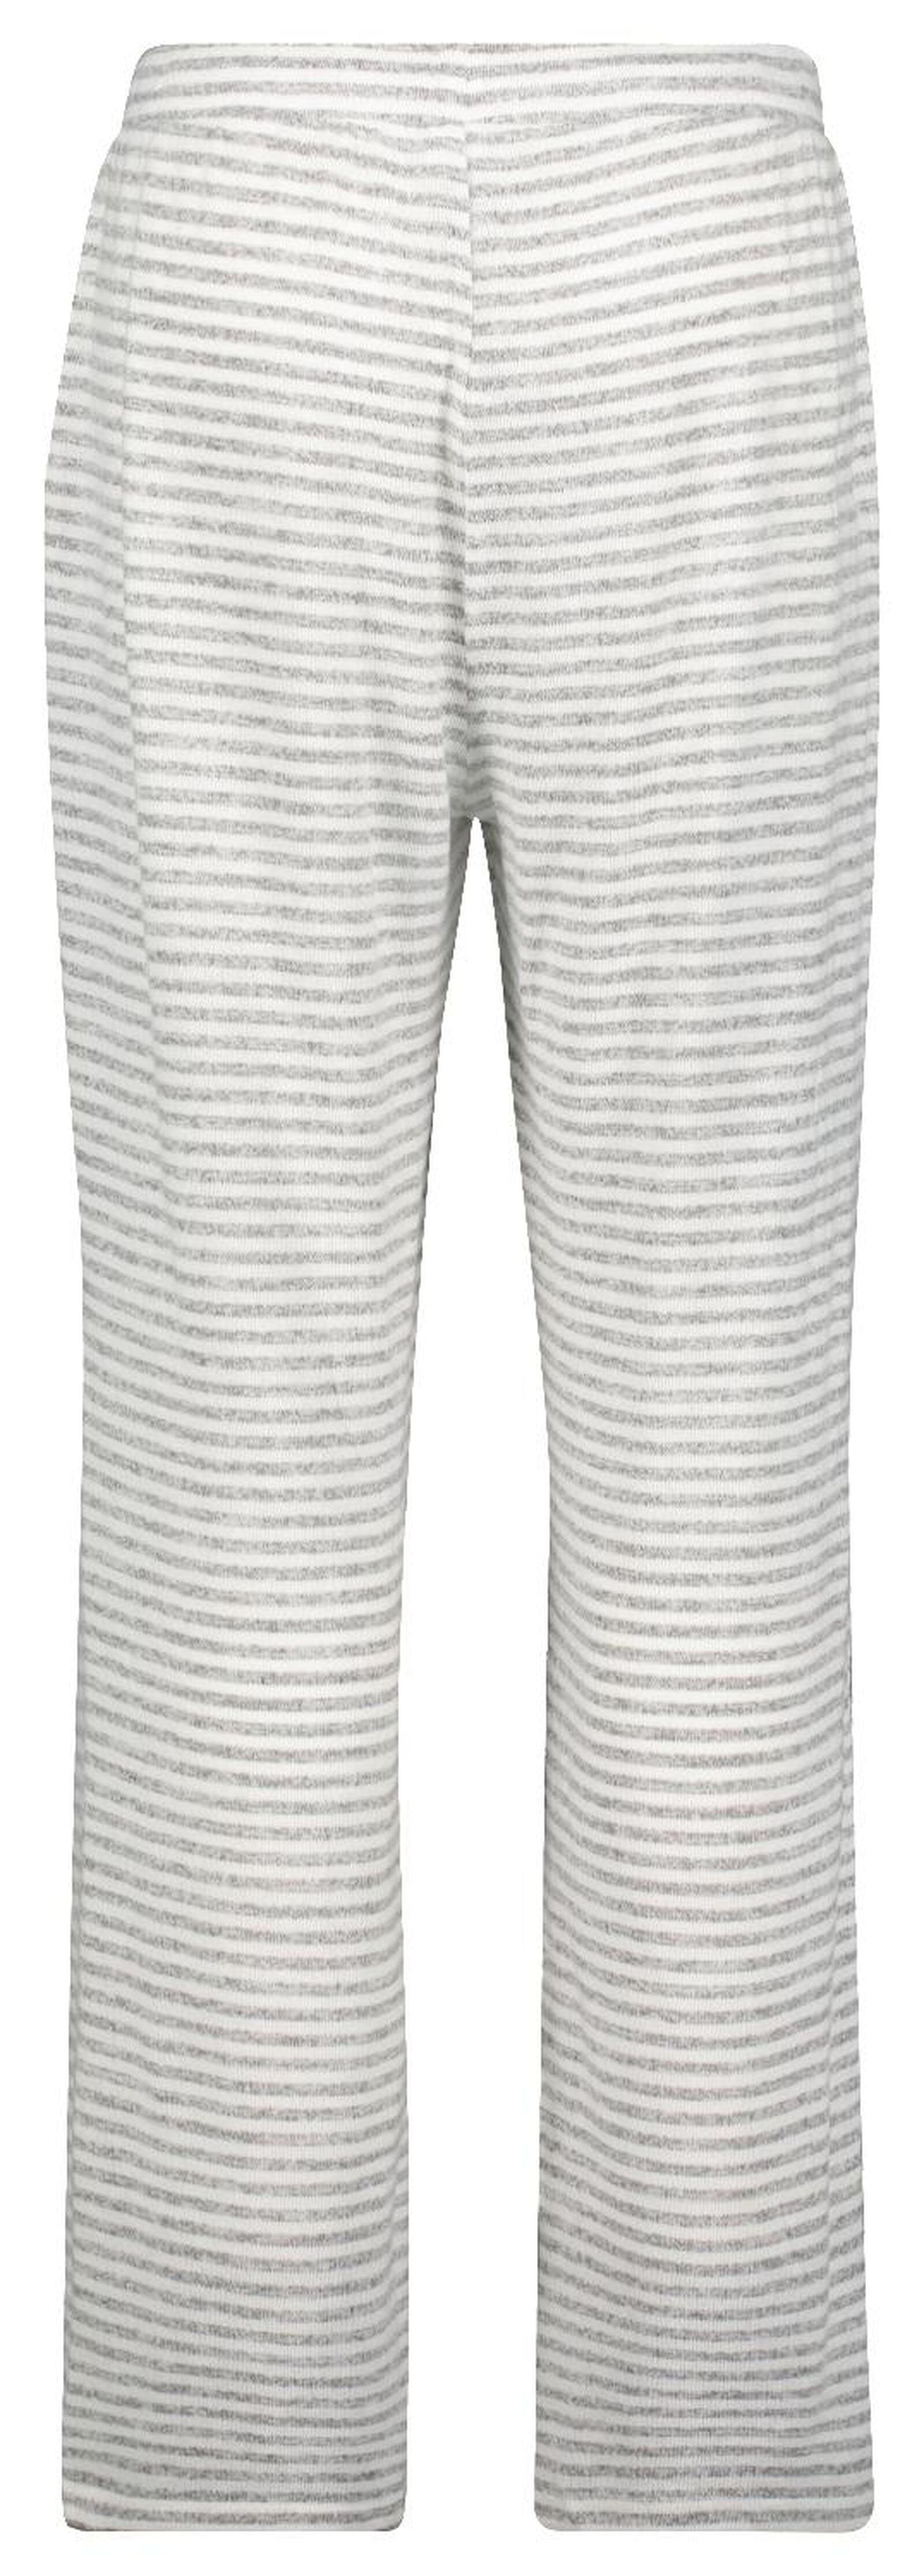 pantalon de pyjama femme viscose rayure gris chiné XL - 23421904 - HEMA